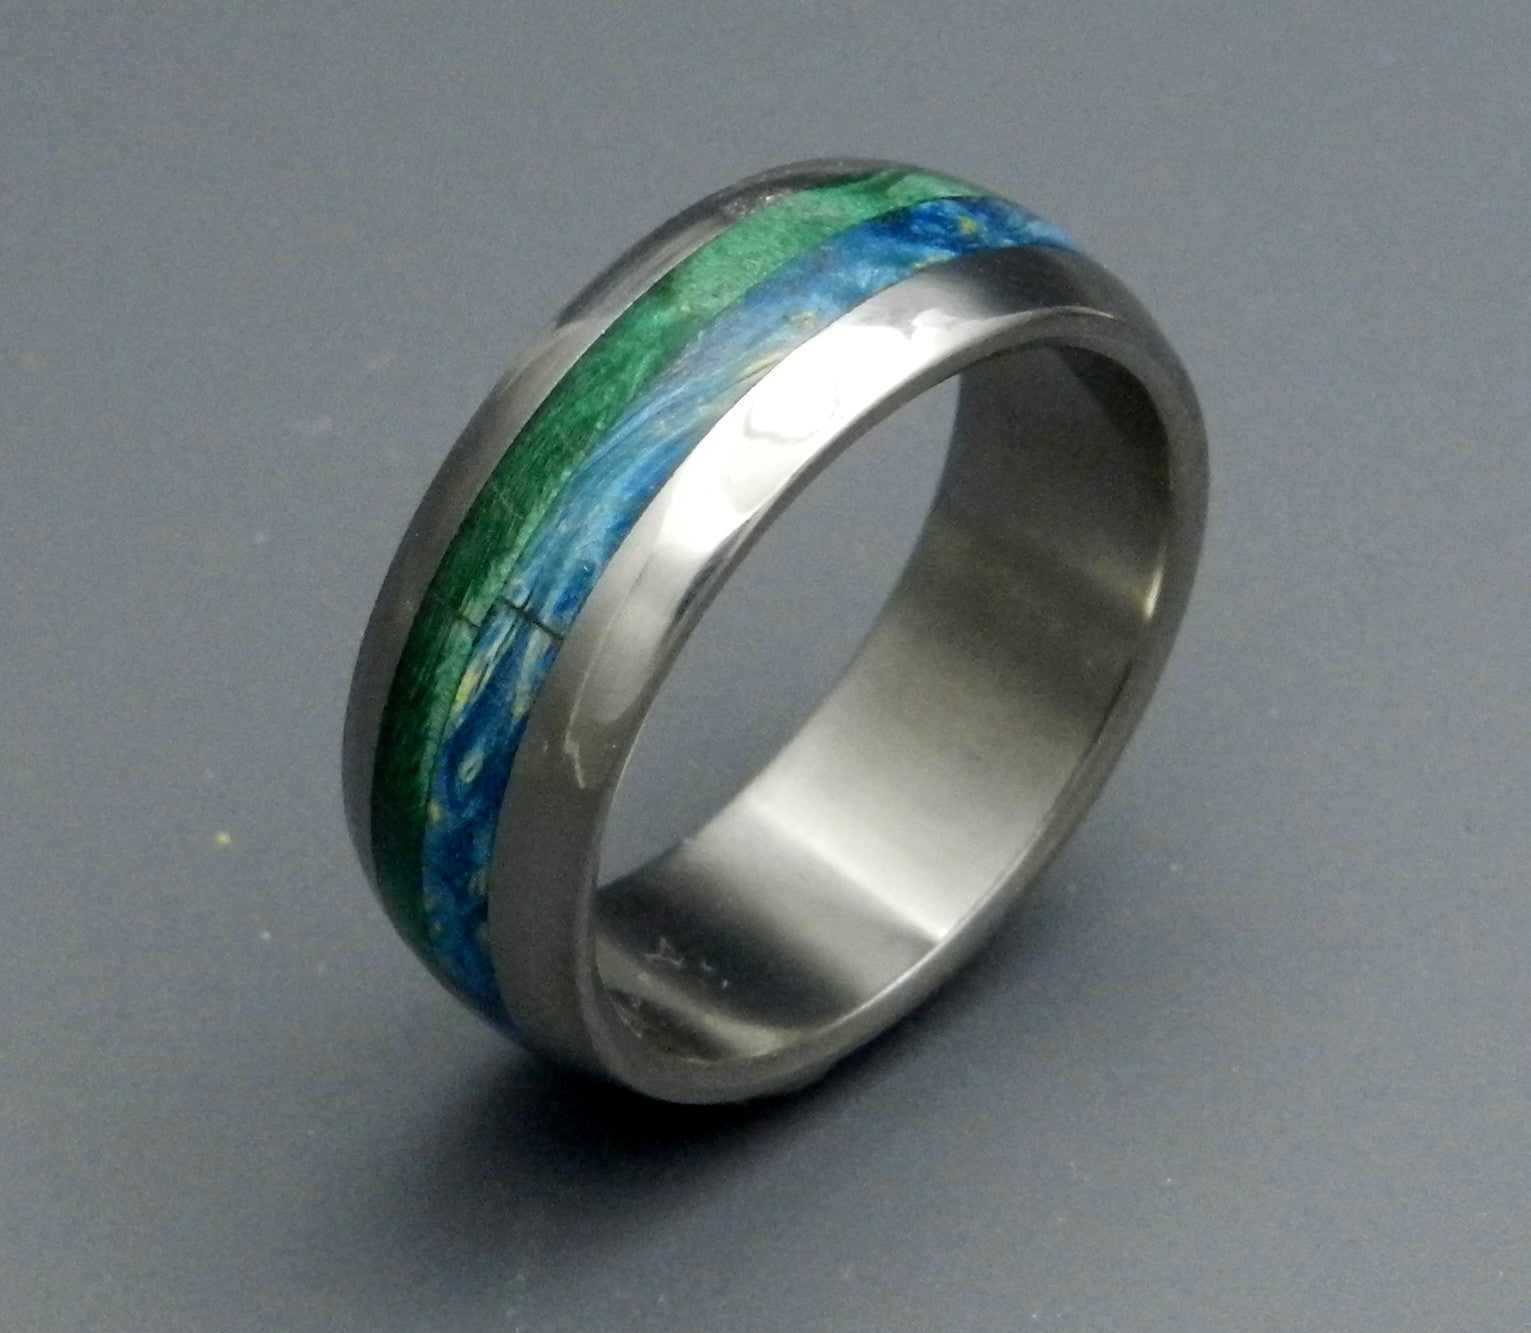 BLISS | Blue Box Elder Wood & Titanium - Wedding Ring Sets - Unique Wedding Rings - Minter and Richter Designs